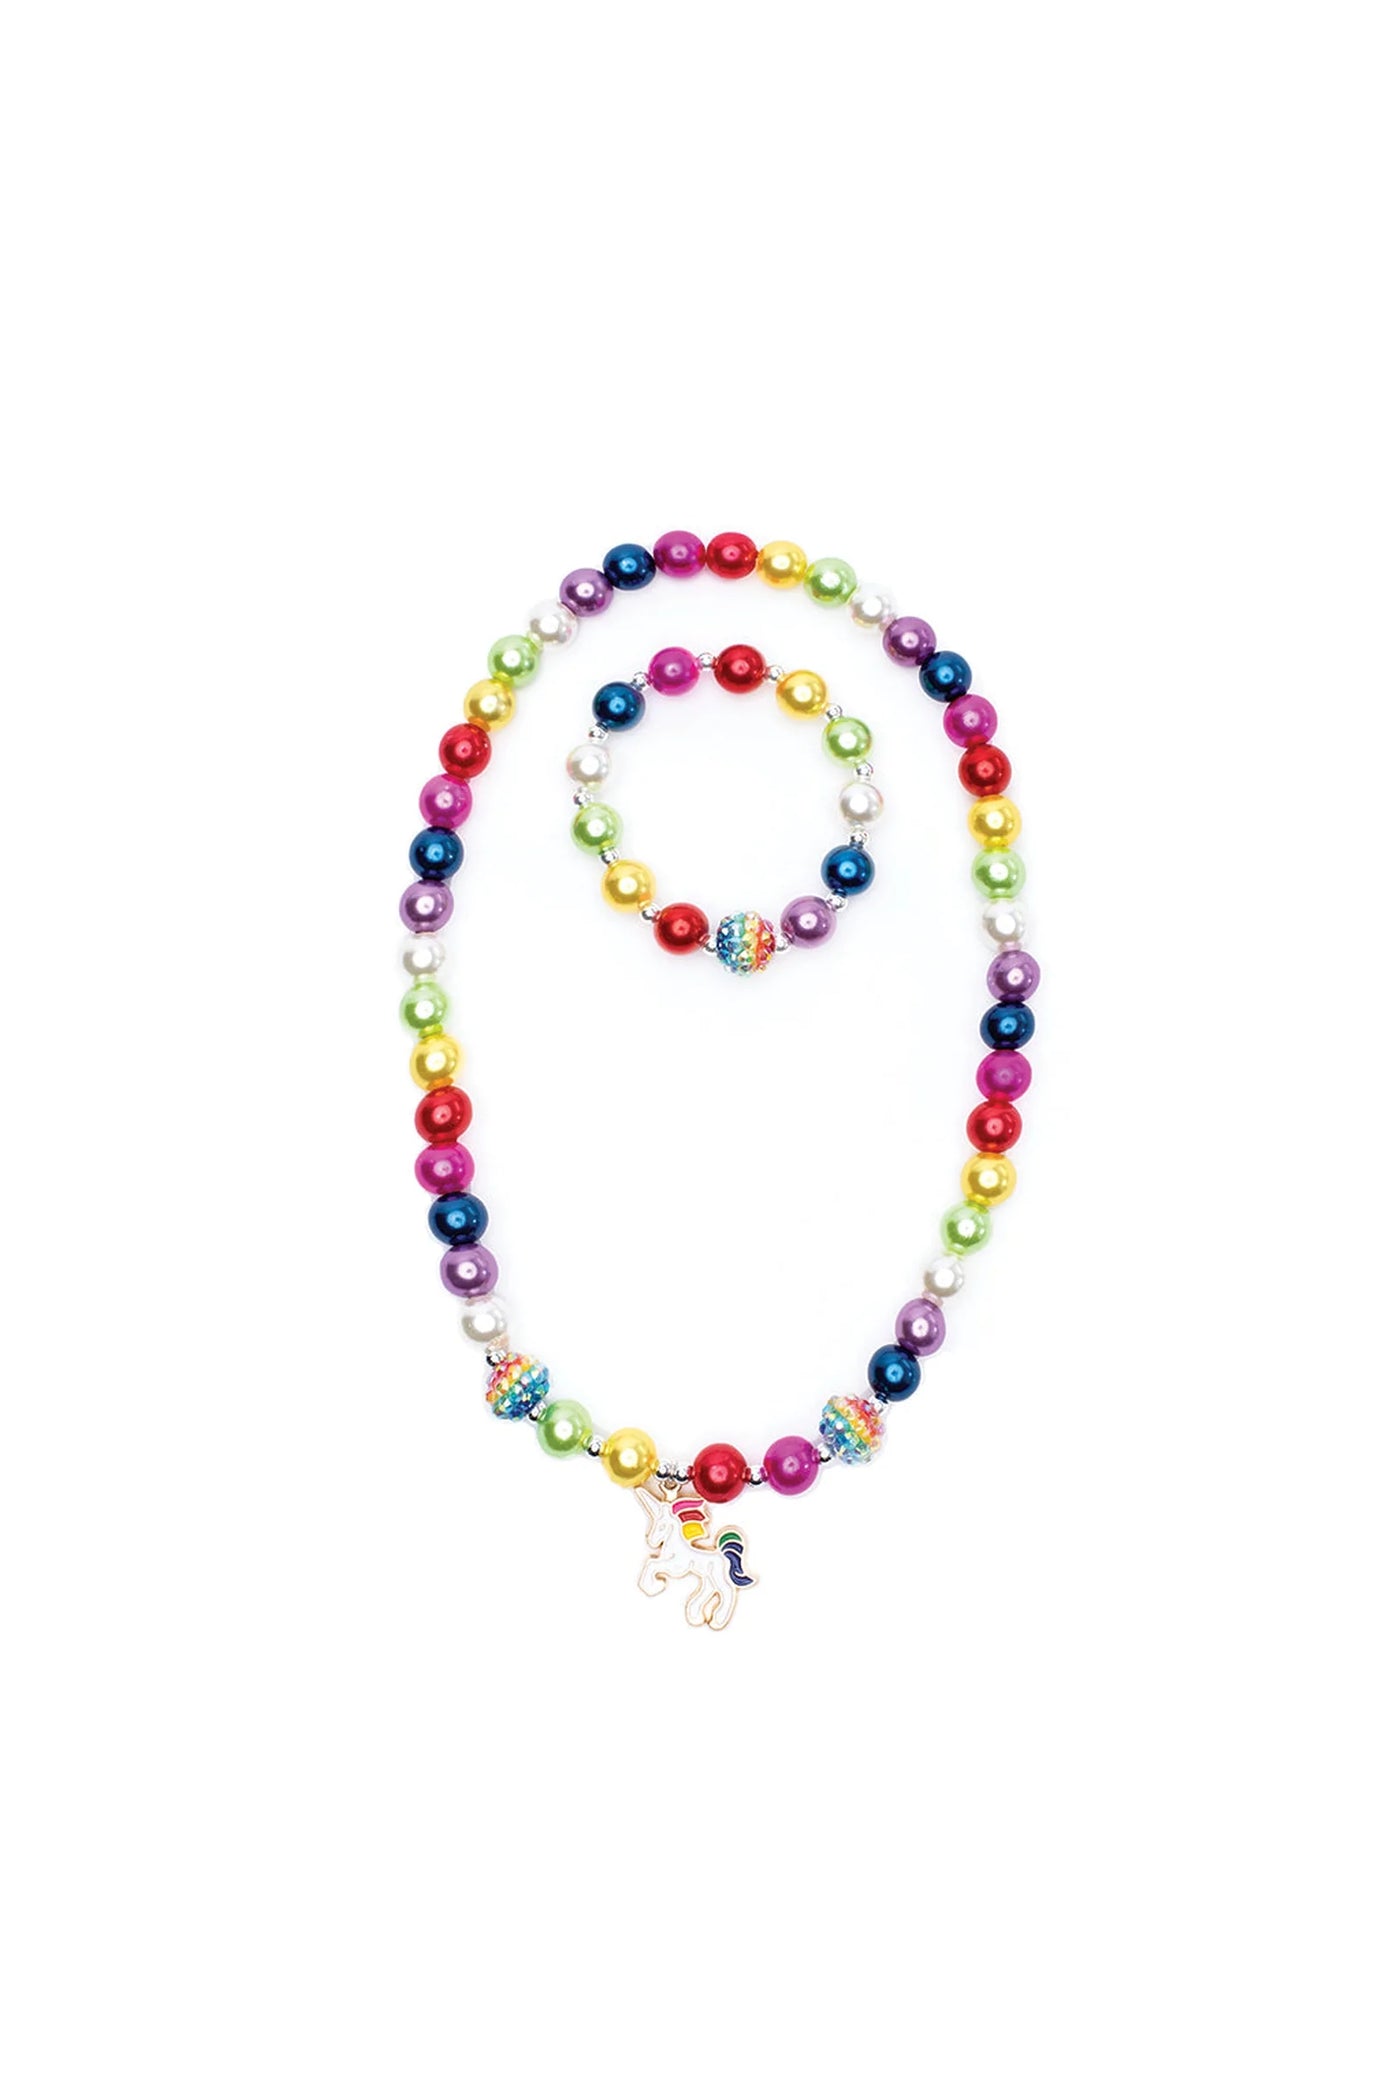 Gumball Rainbow Necklace and Bracelet Set - Breckenridge Baby